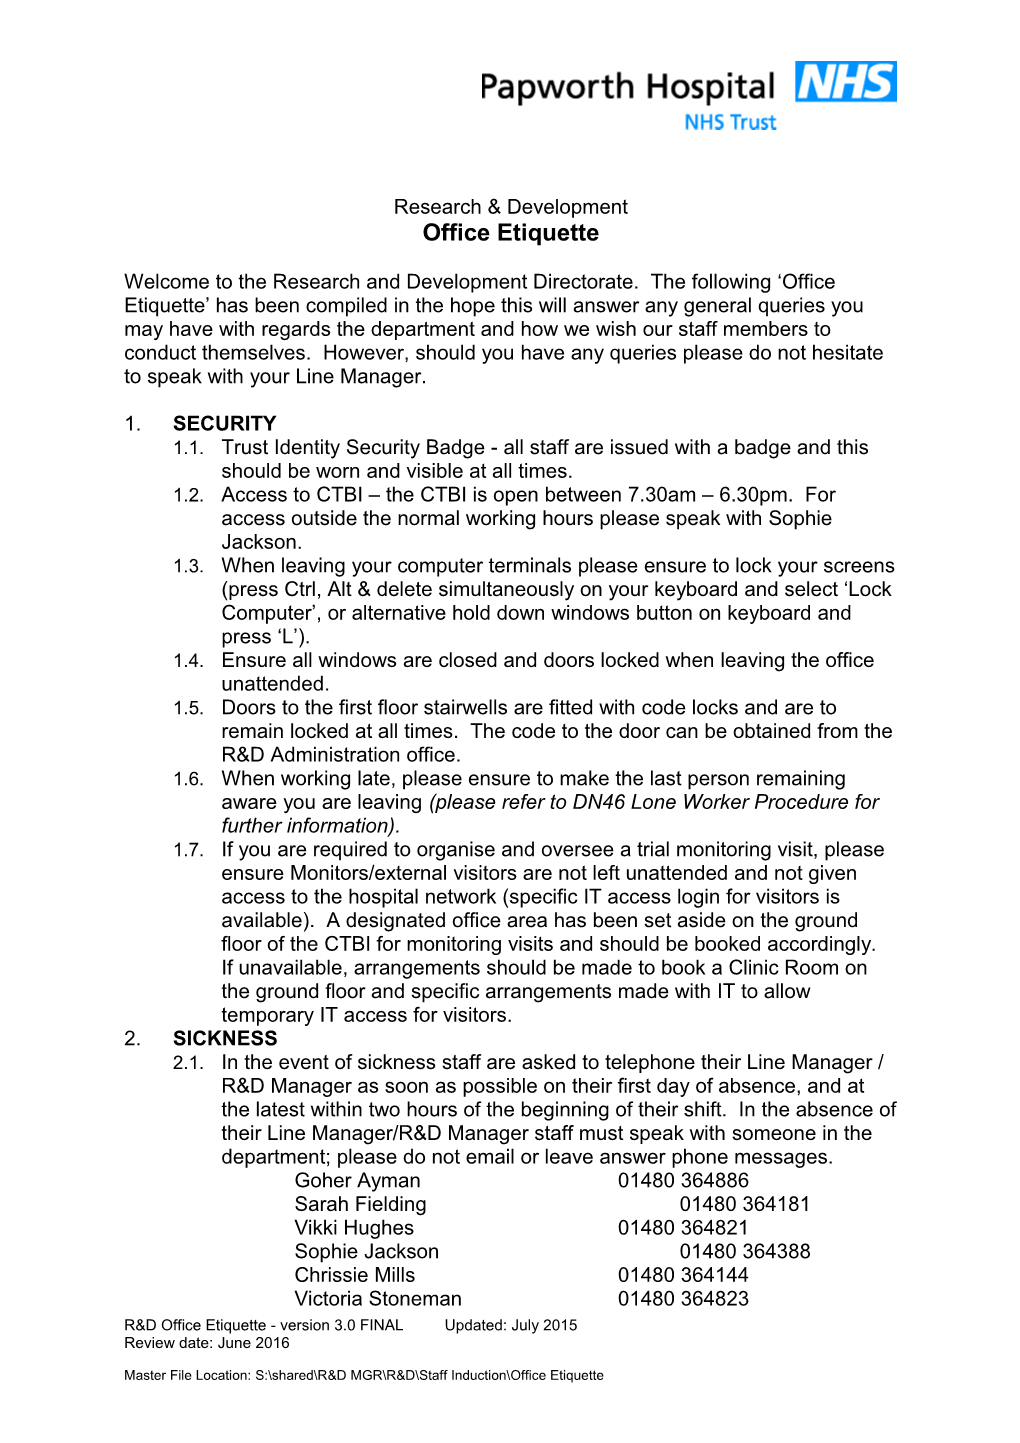 R&D Office Etiquette - Version 3.0 Finalupdated: July 2015